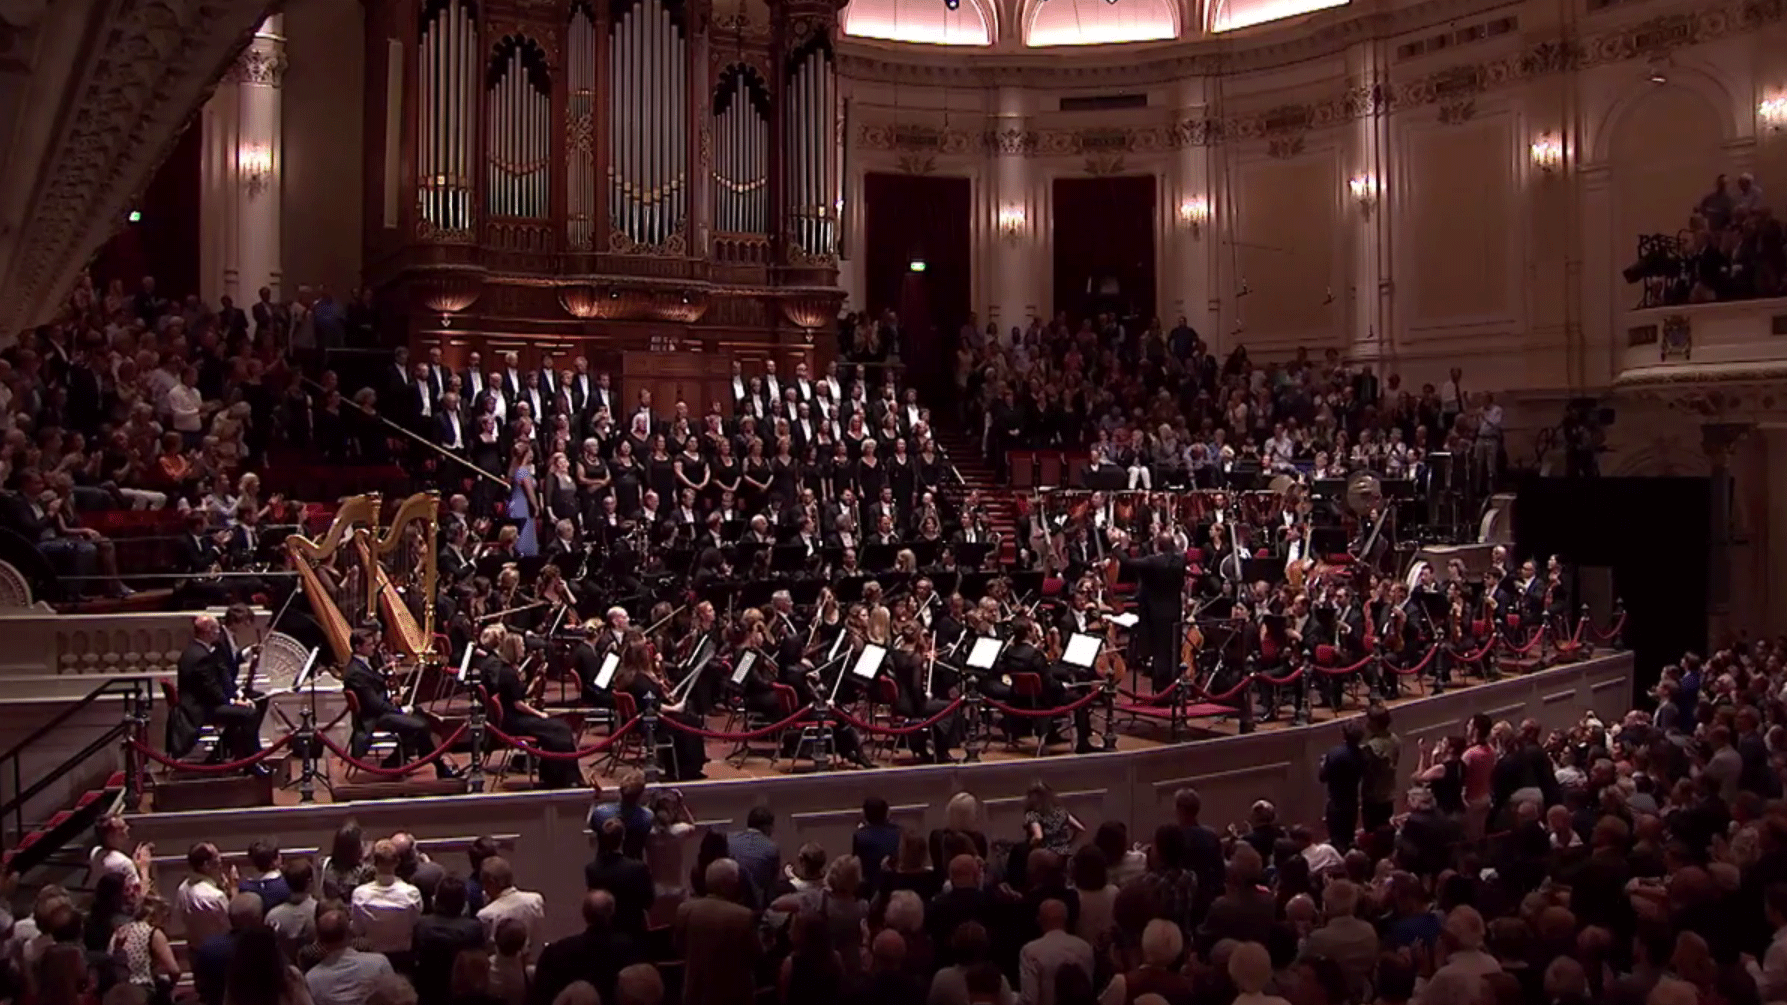 Concert Daniele Gatti conducts Mahler's Symphony No. 2, "Resurrection